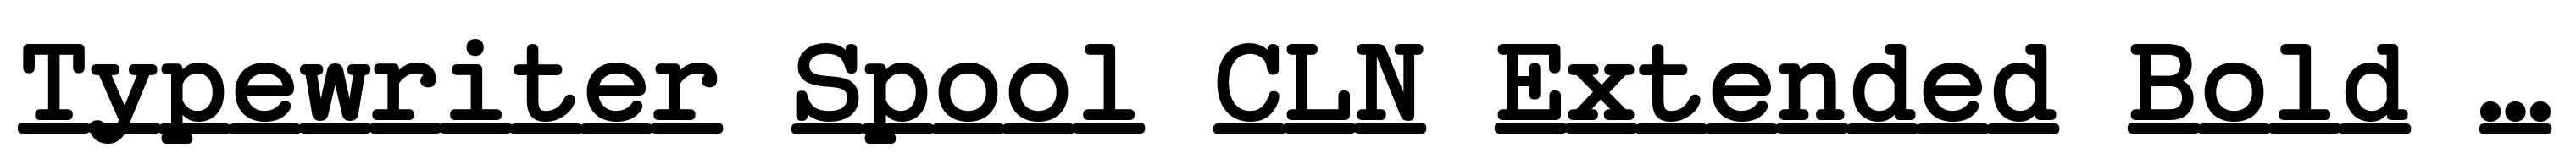 Typewriter Spool CLN Extended Bold Italic